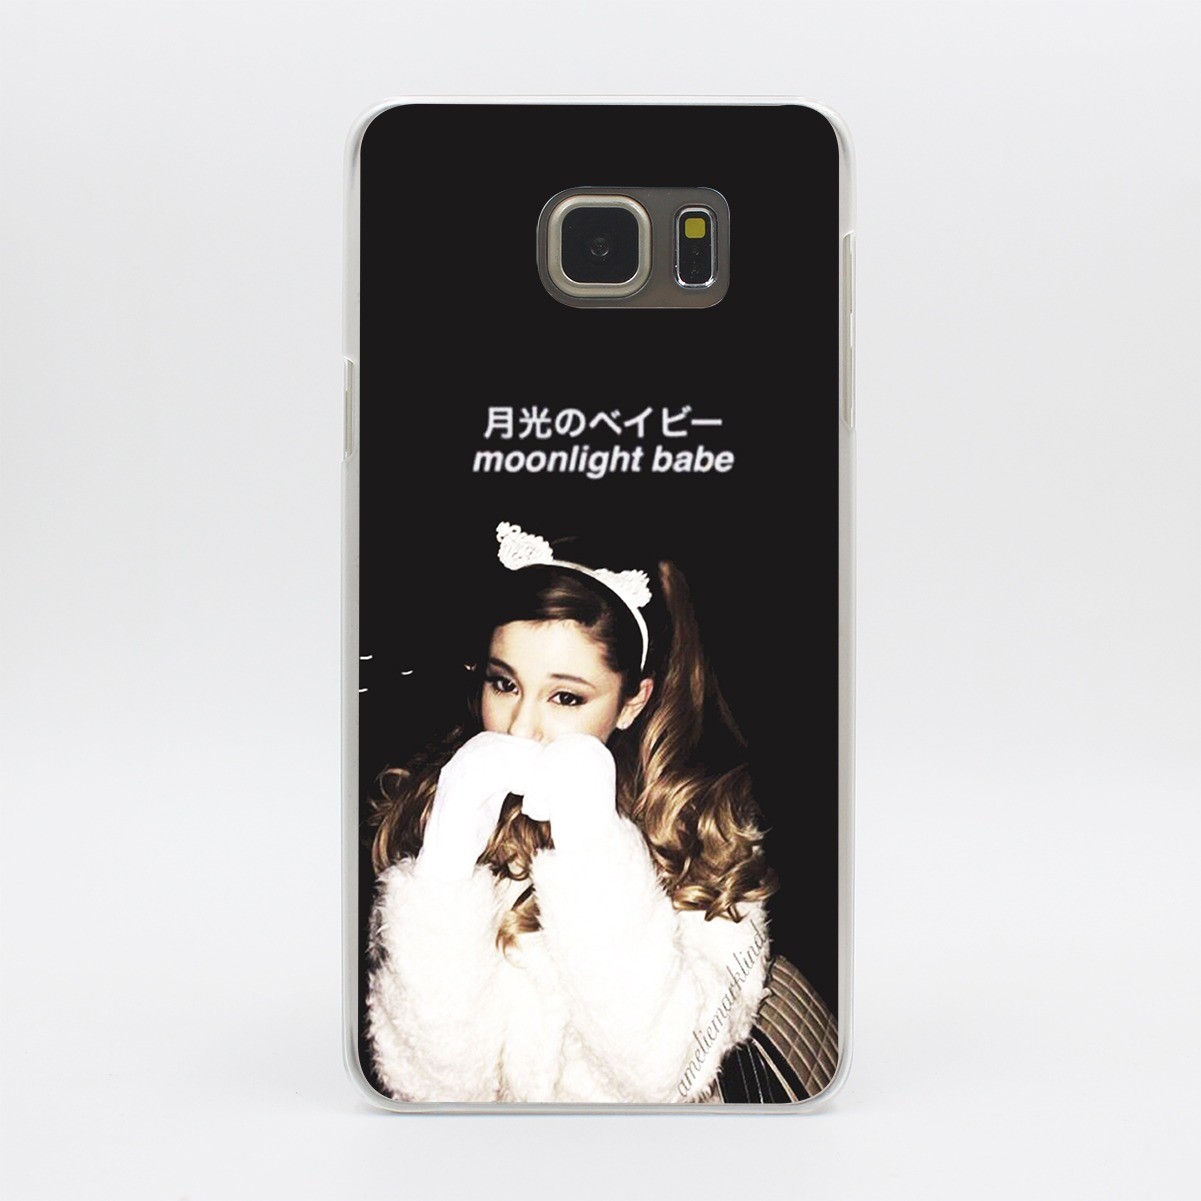 10 2 - Ariana Grande Store